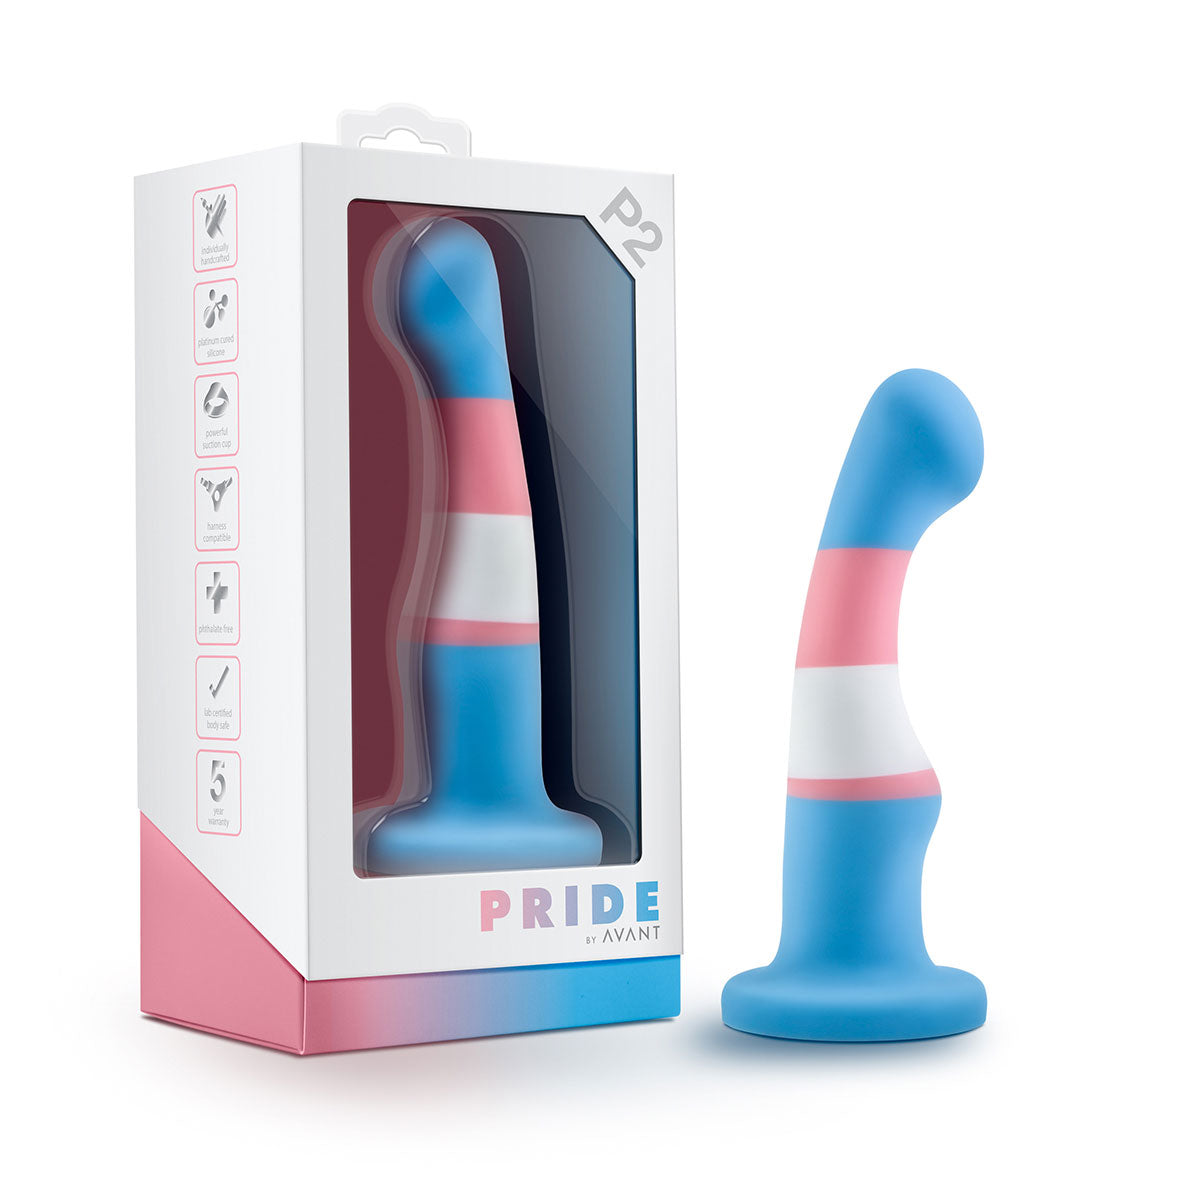 Avant Pride P2 - Trans Intimates Adult Boutique